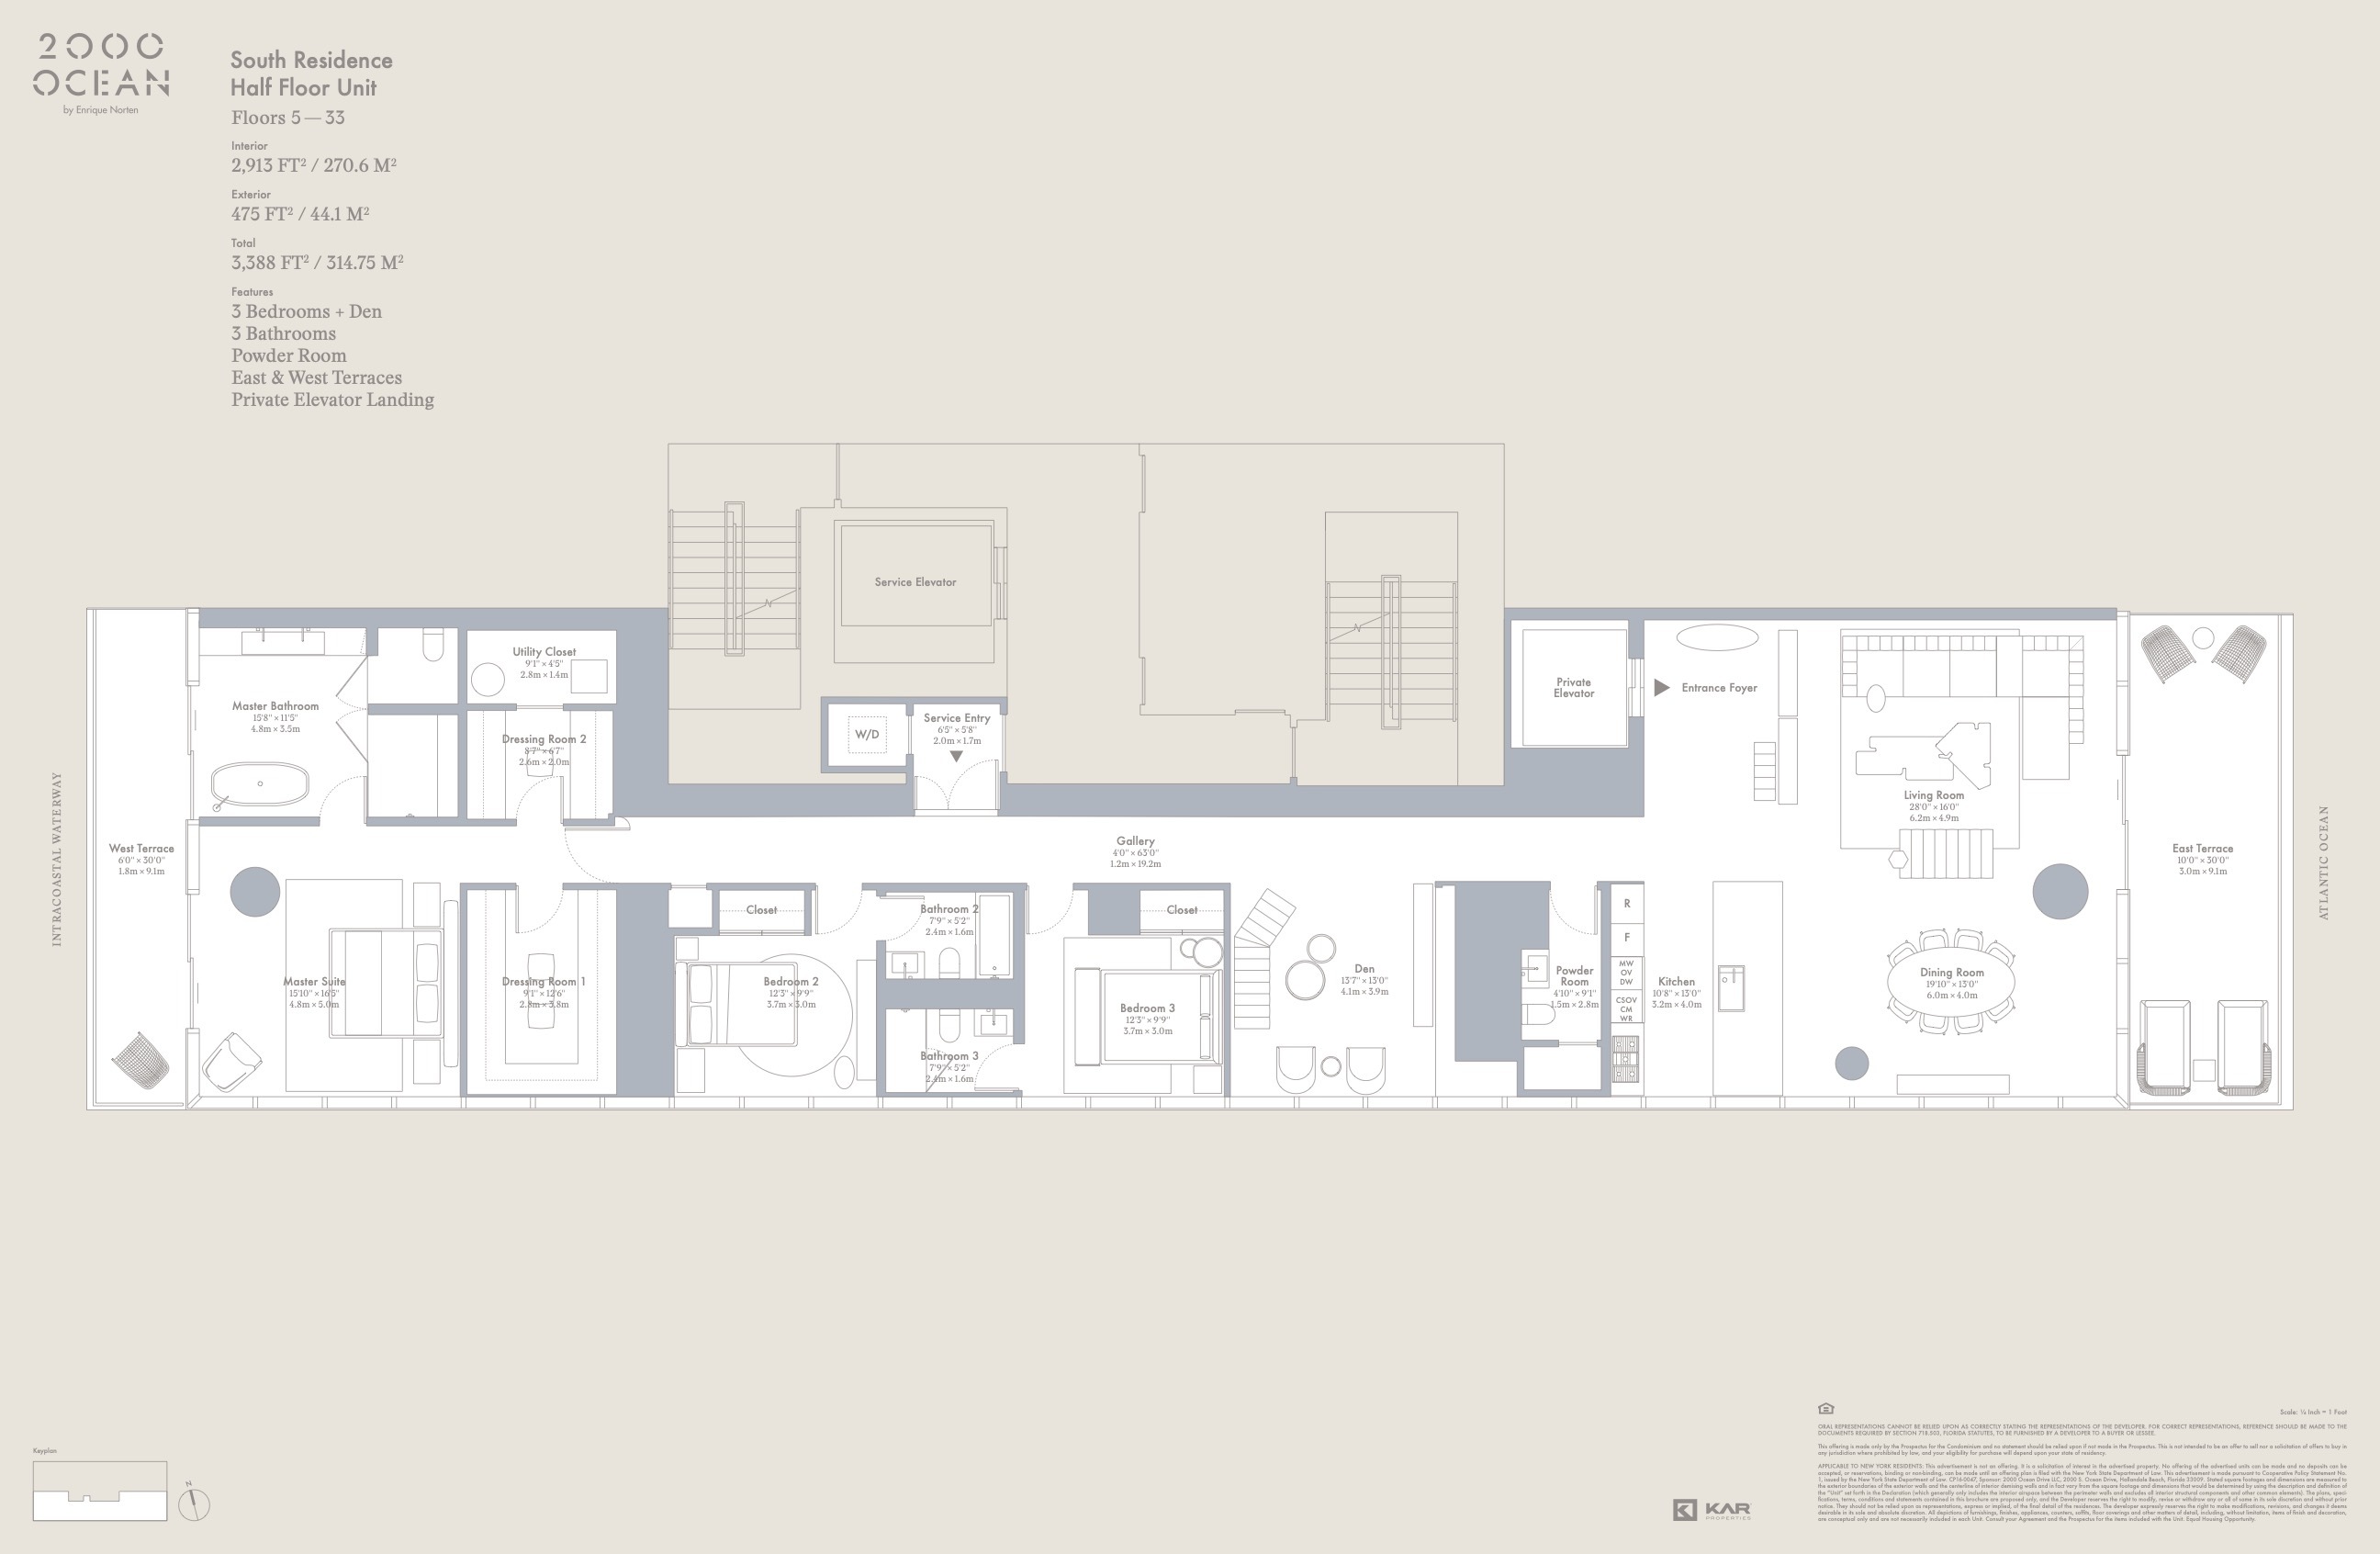 Floor Plan for 2000 Ocean Hallandale Beach Floorplans, South Residence Half Floor Unit